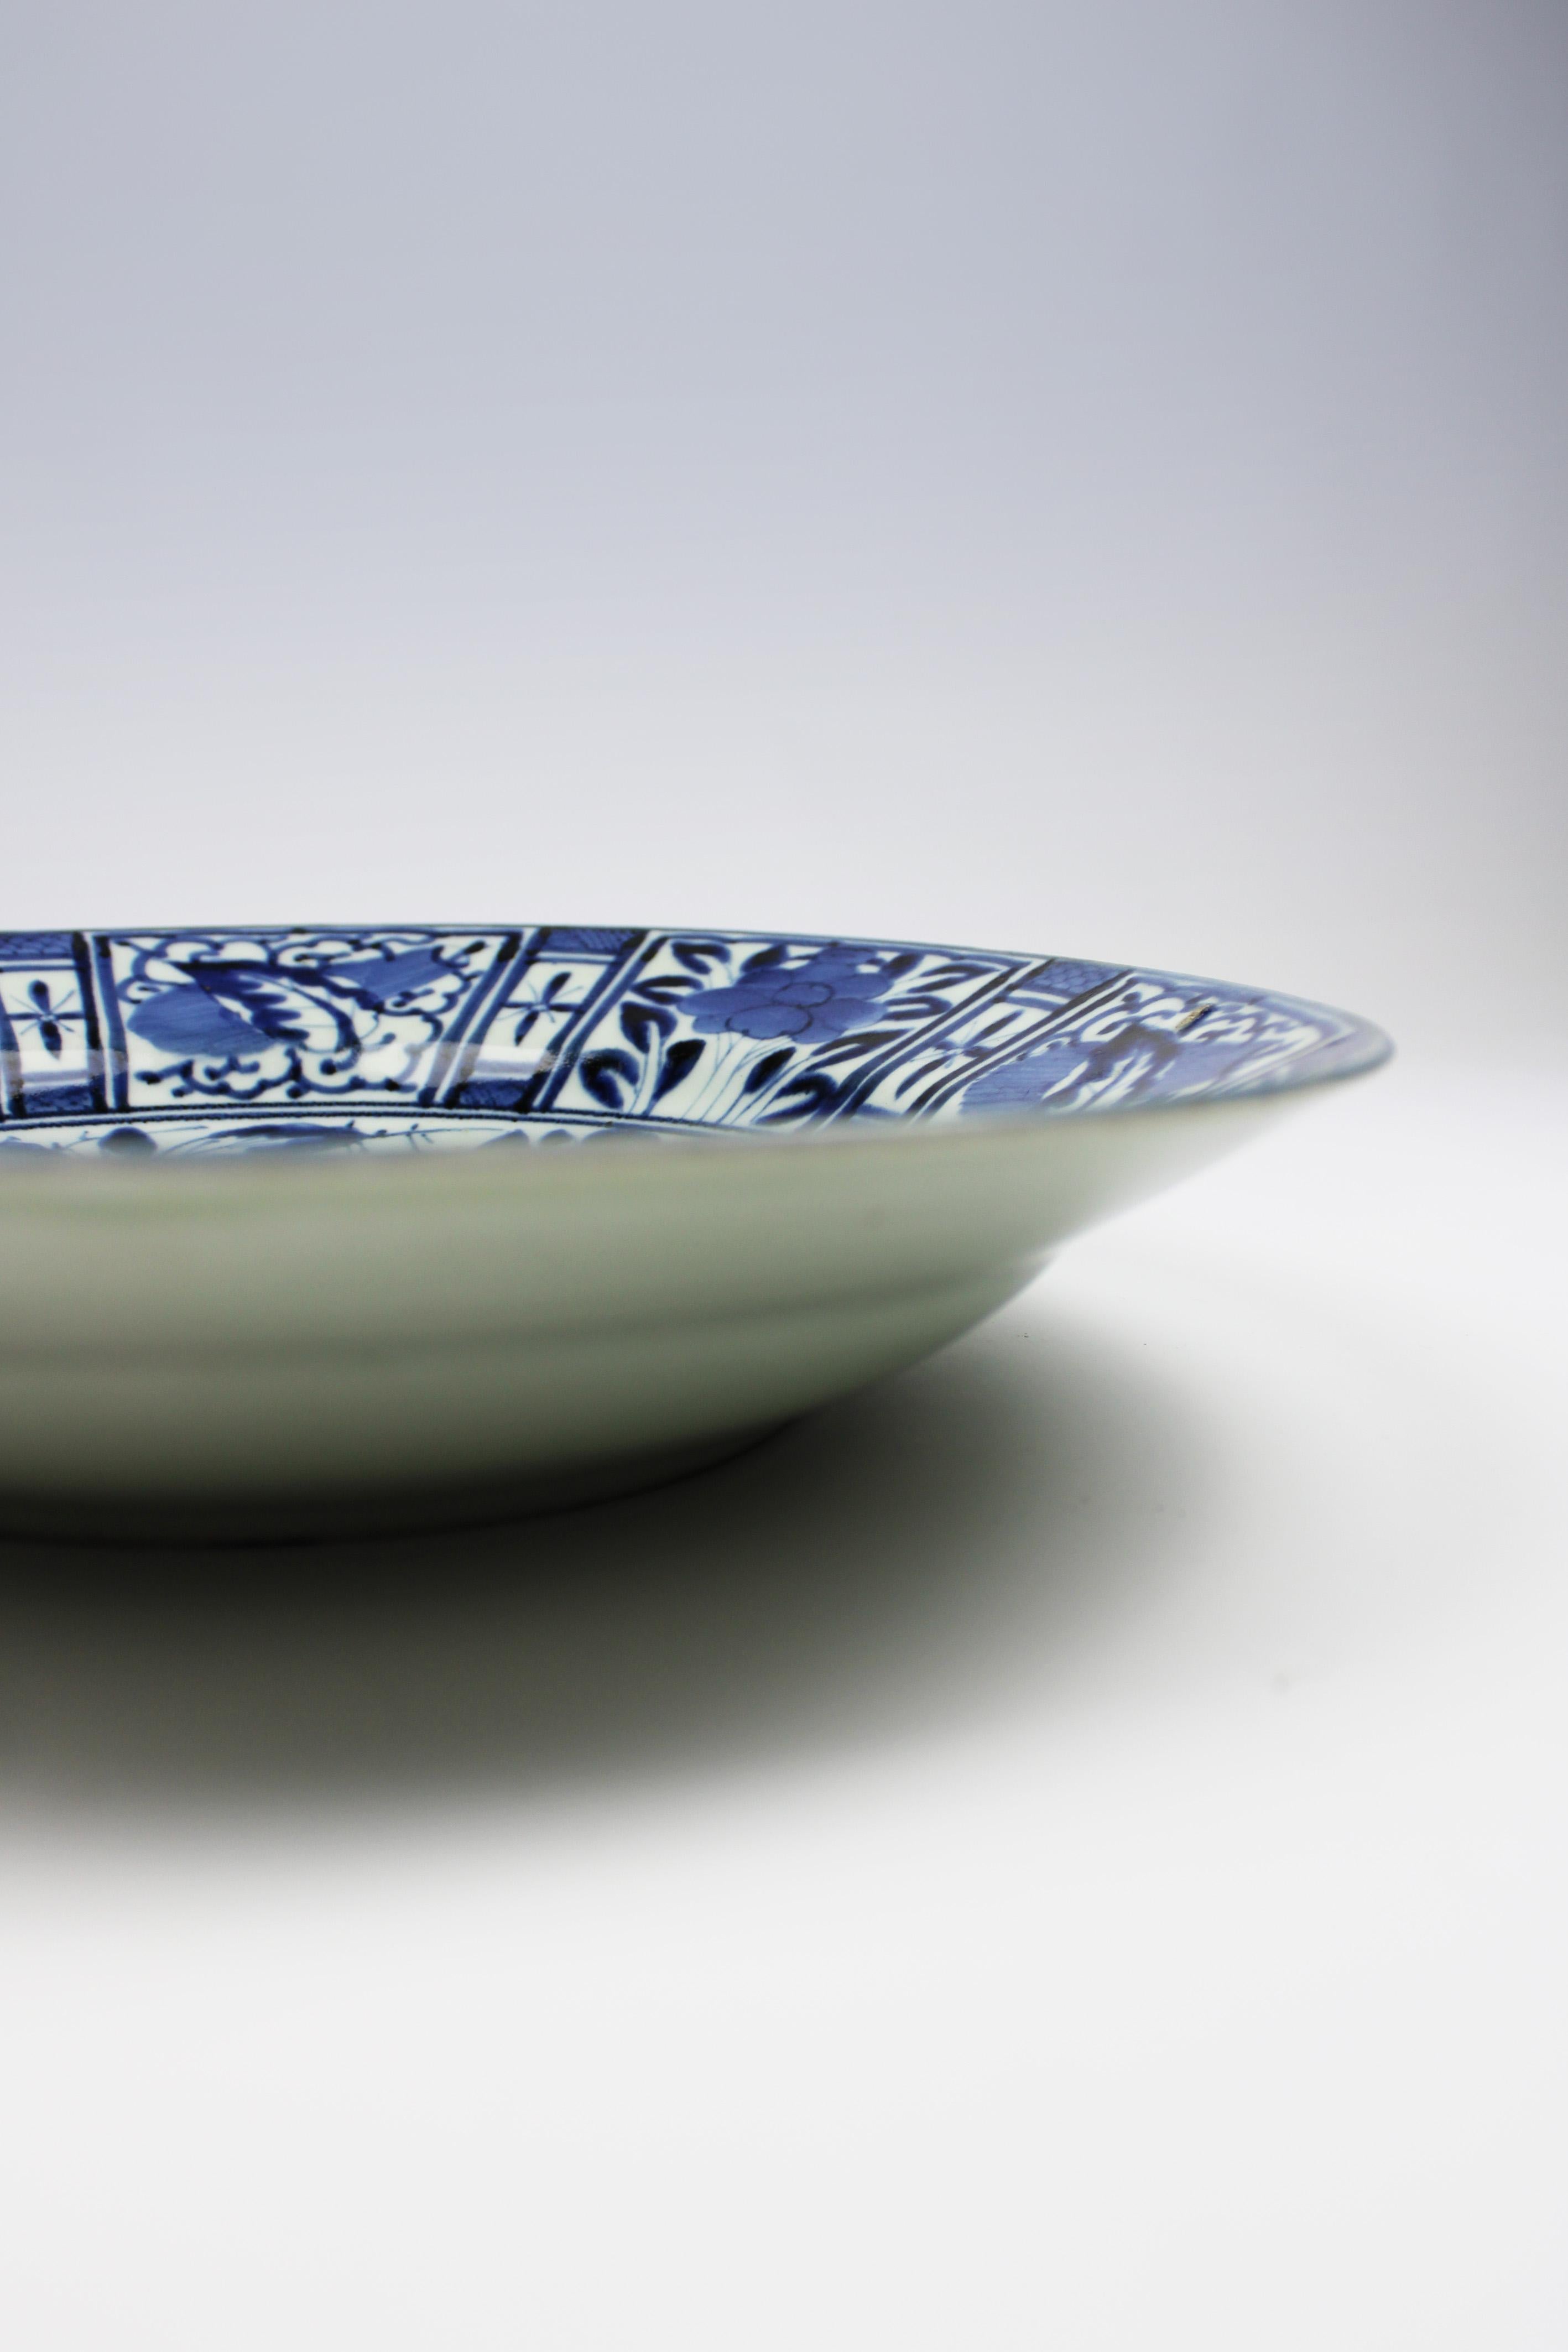 18th Century Porcelain Plate Japanese Arita Edo Period Kraak Blue White Japan  In Good Condition For Sale In Antwerpen, BE